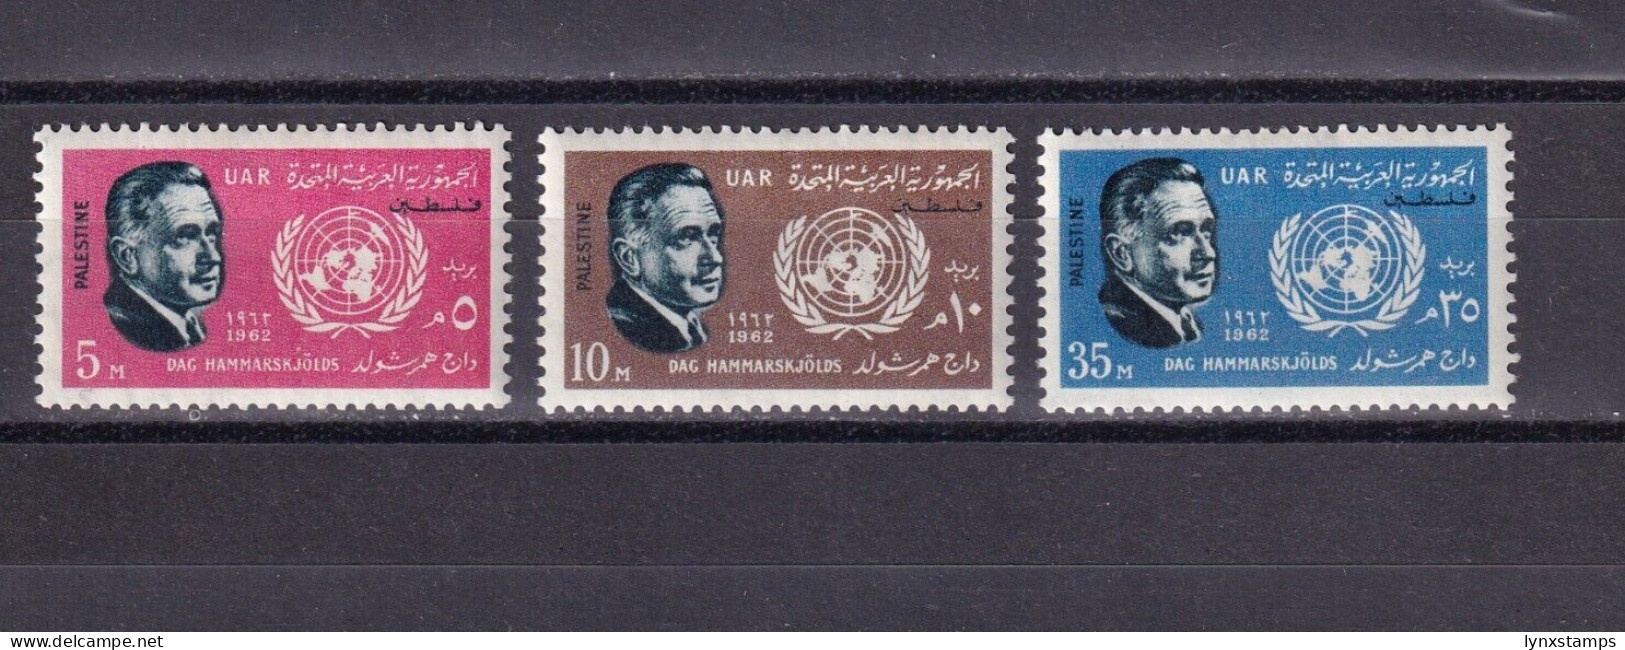 SA06b United Arab Republic Palestine 1962 Dag Hammarskjold Commemoration Mint - Palestine